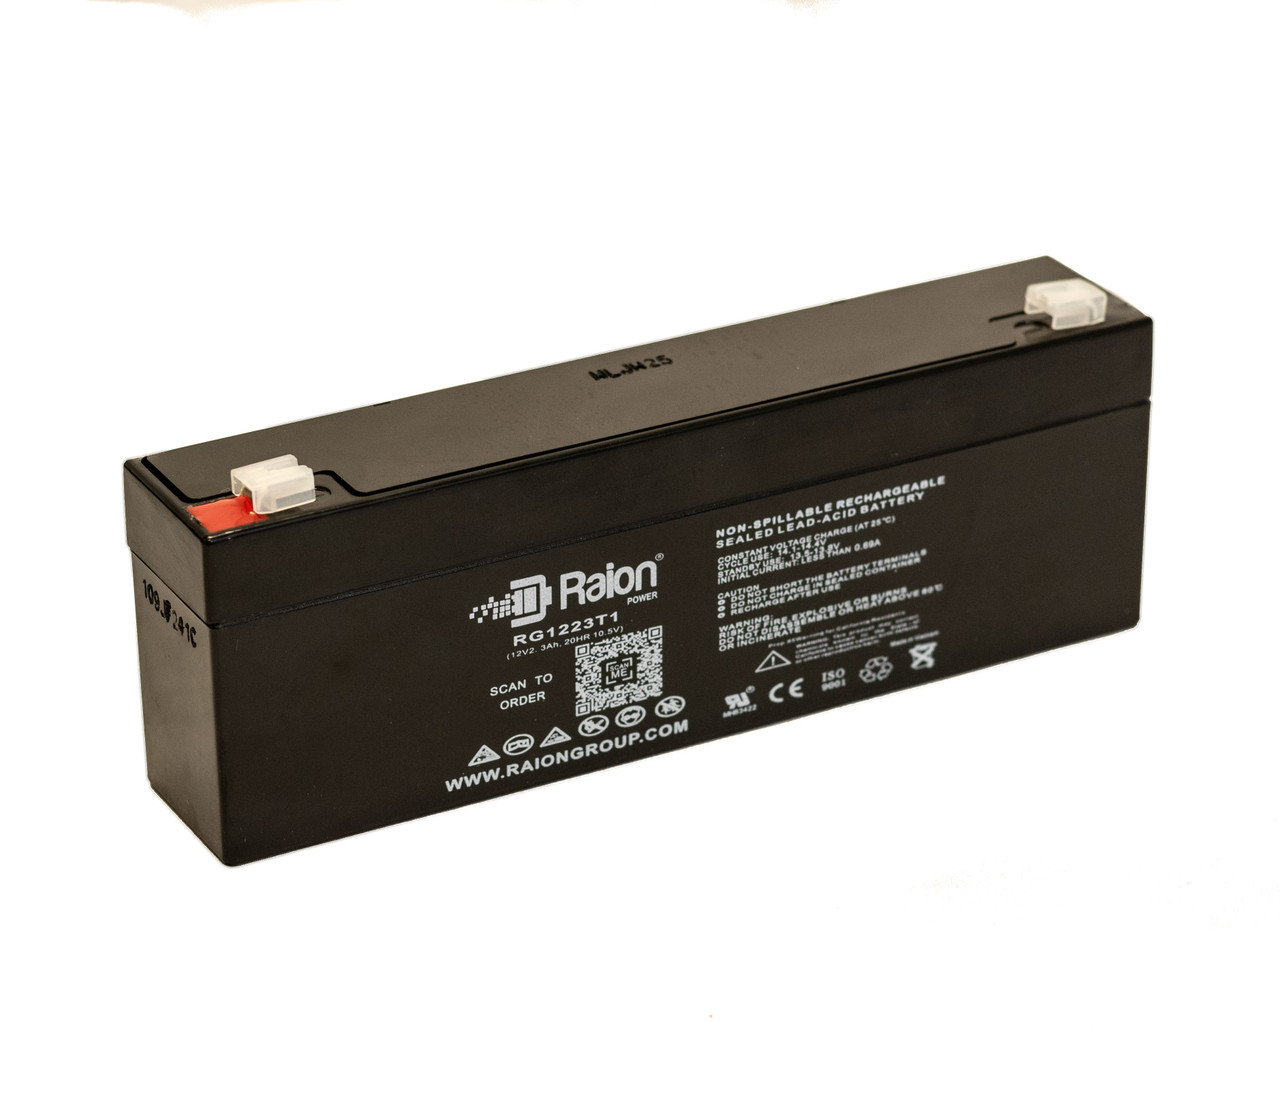 Raion Power RG1223T1 Replacement Battery for Mortara ELI 150c ECG Recorder